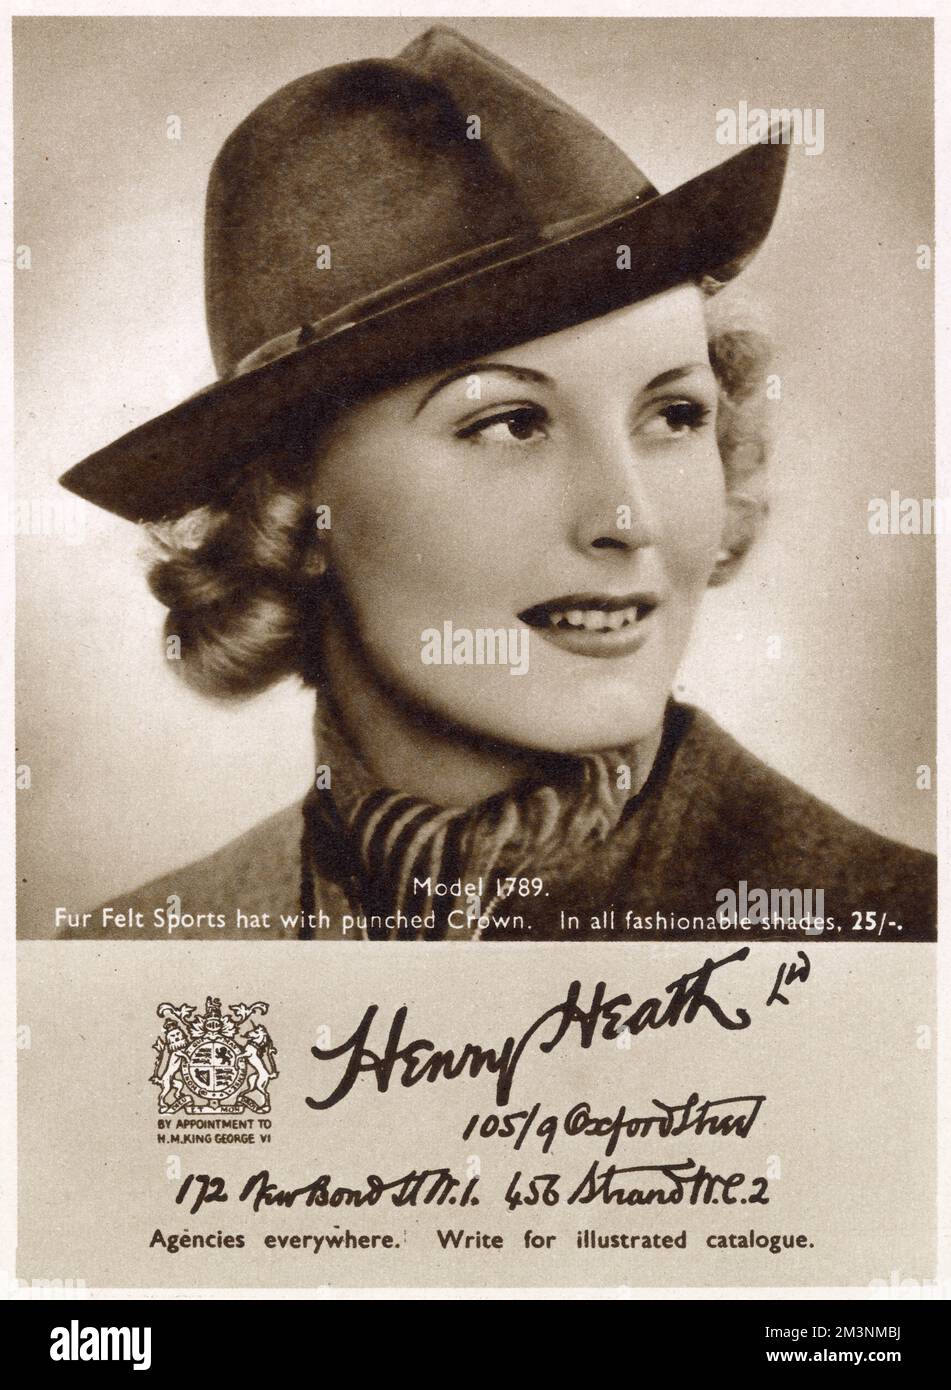 Eine Frau mit Filz-homburg-Hut. Stockfoto